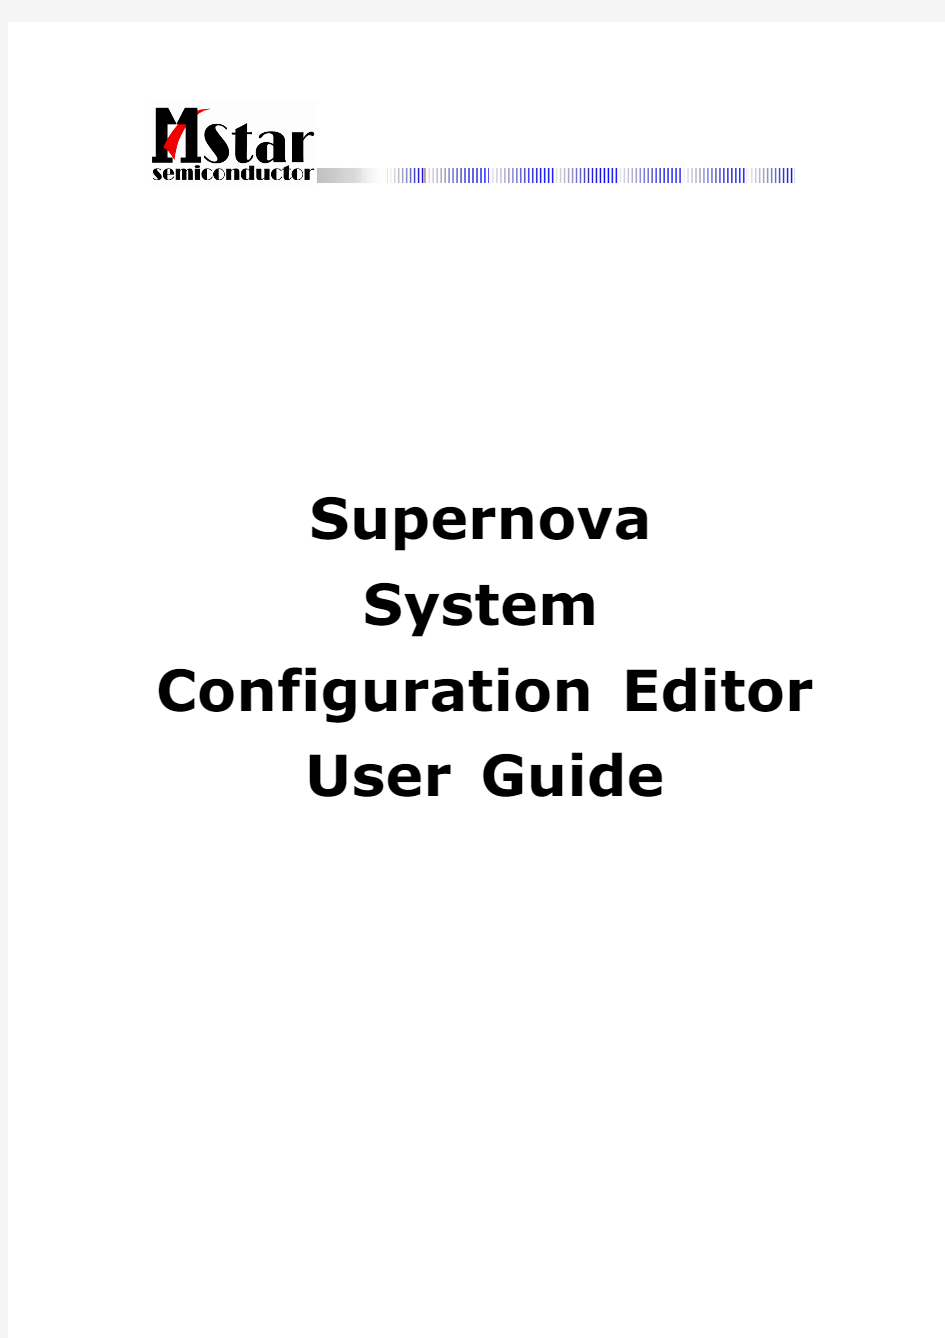 Supernova System Configuration Editor User Guide